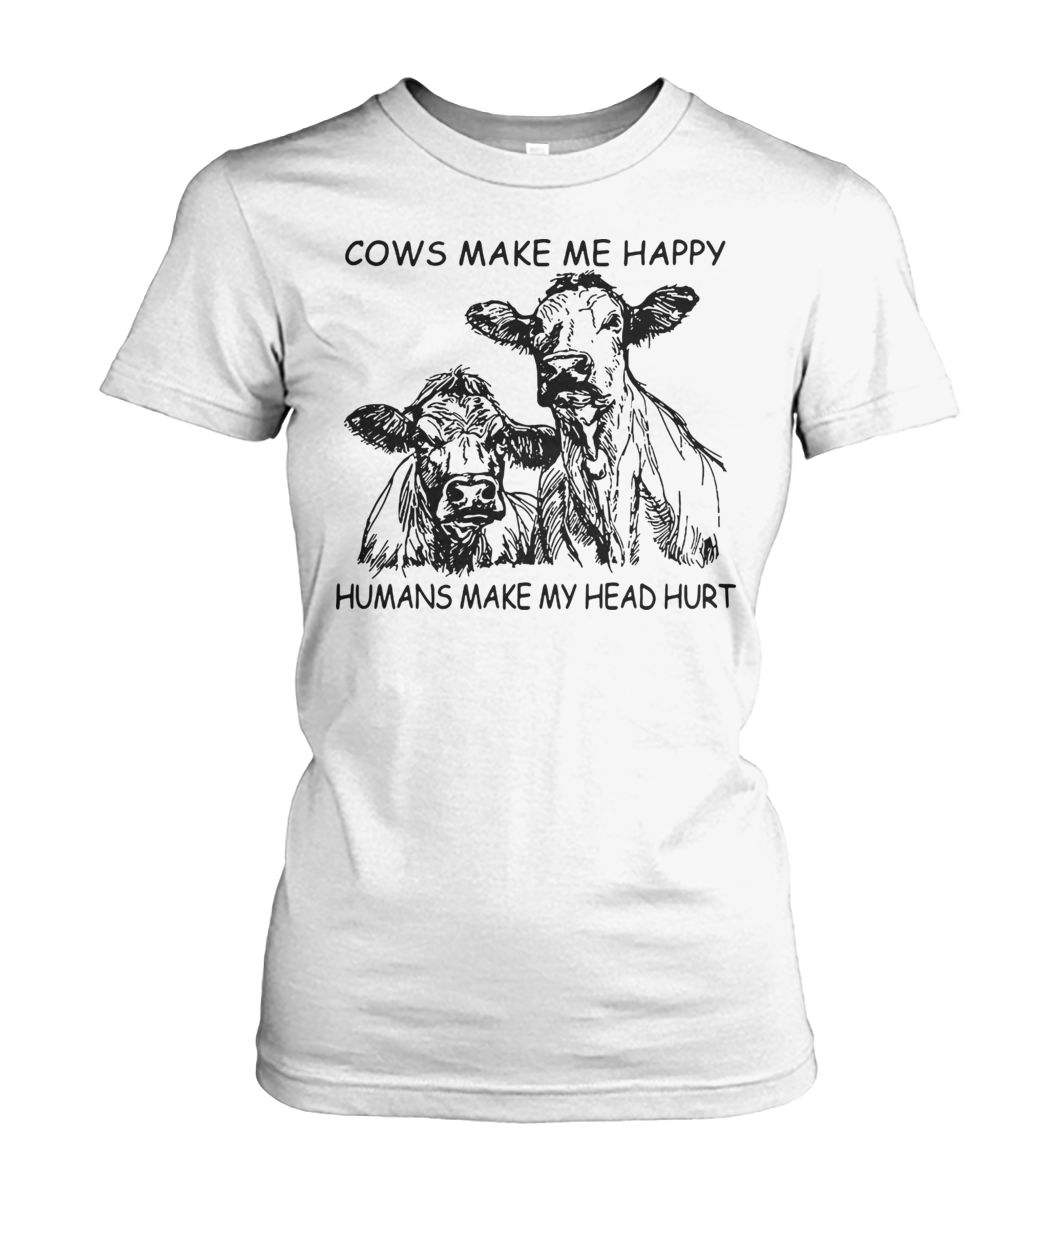 Cows make me happy humans make my head hurt women's crew tee